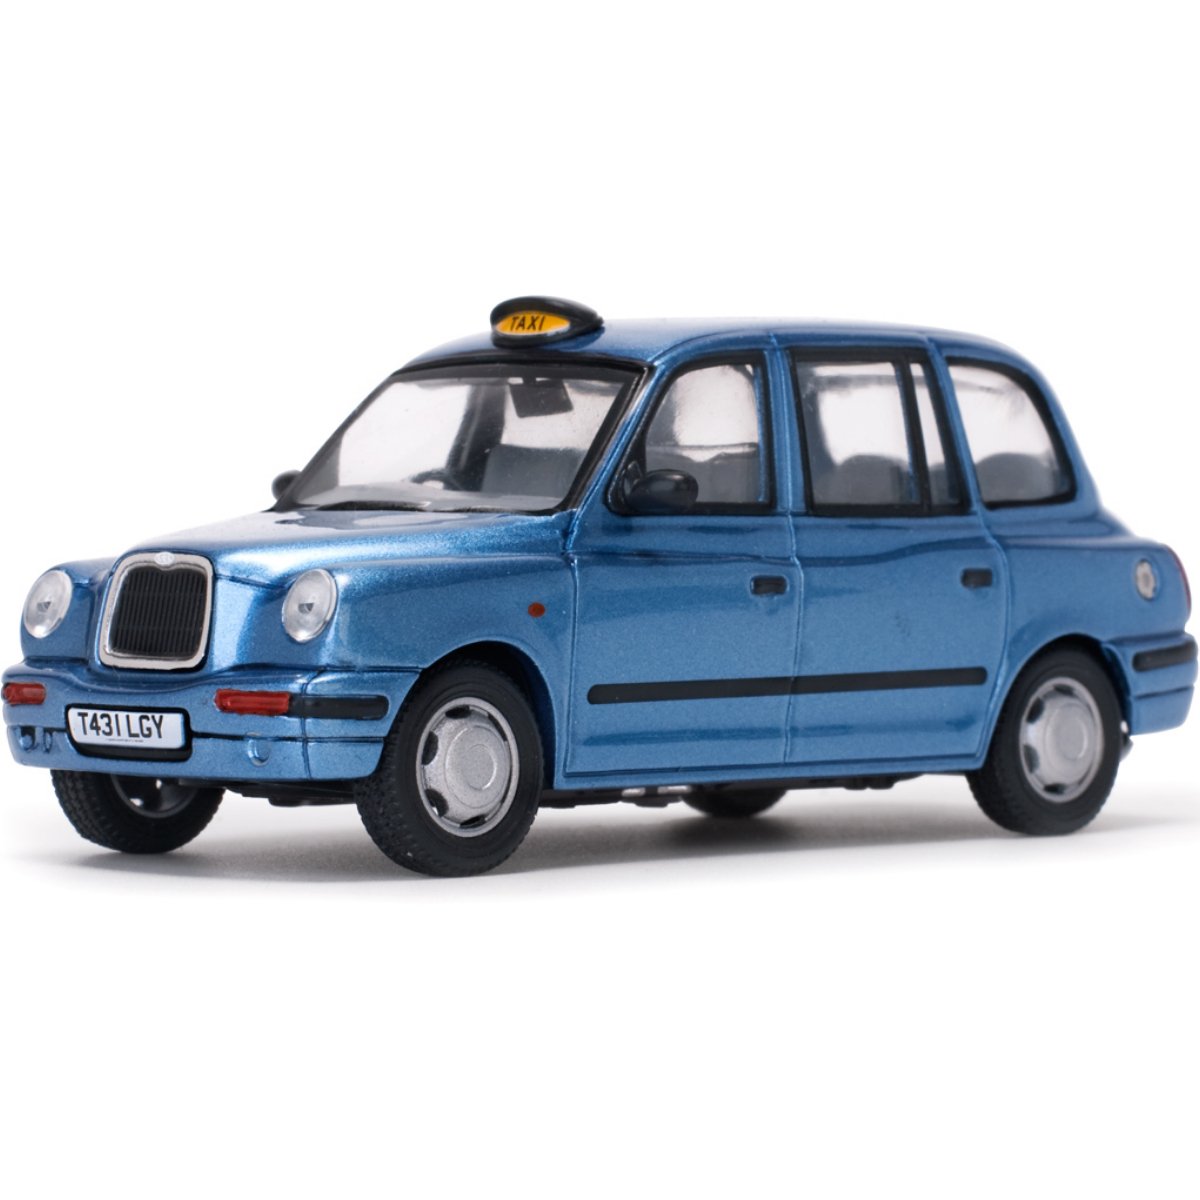 Vitesse 1998 TX1 London Taxi Cab - Blue - Phillips Hobbies